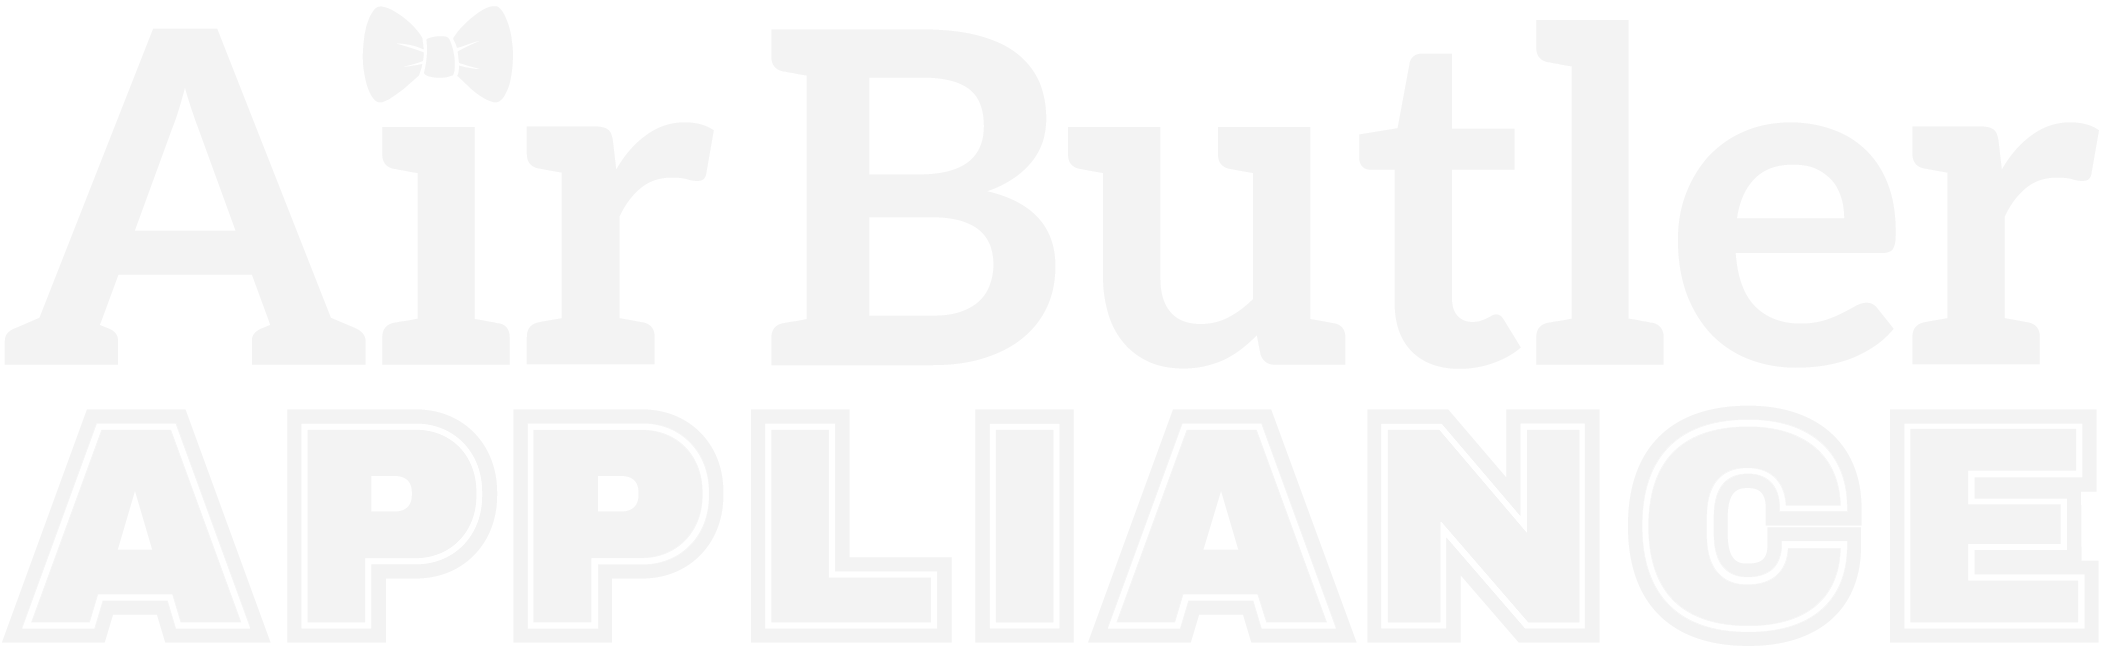 Air Butler Appliance logo